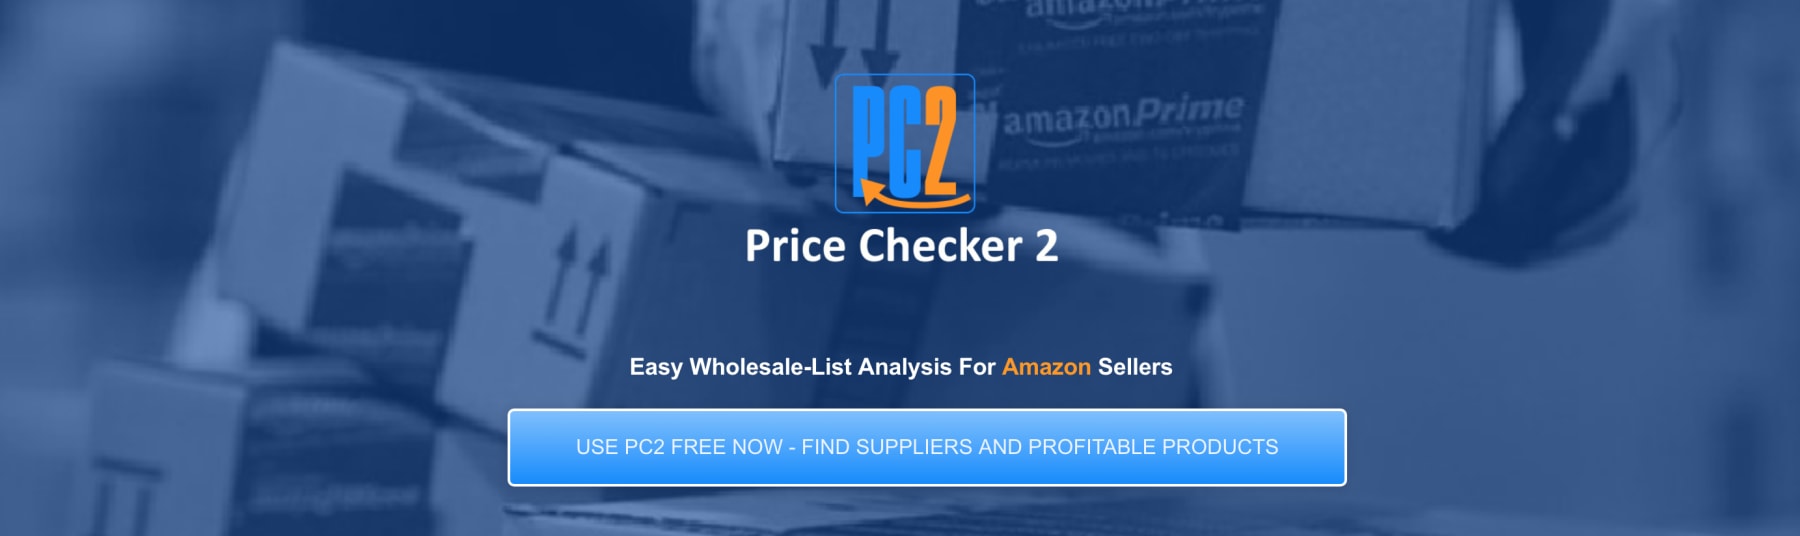 Price Checker 2 screenshot